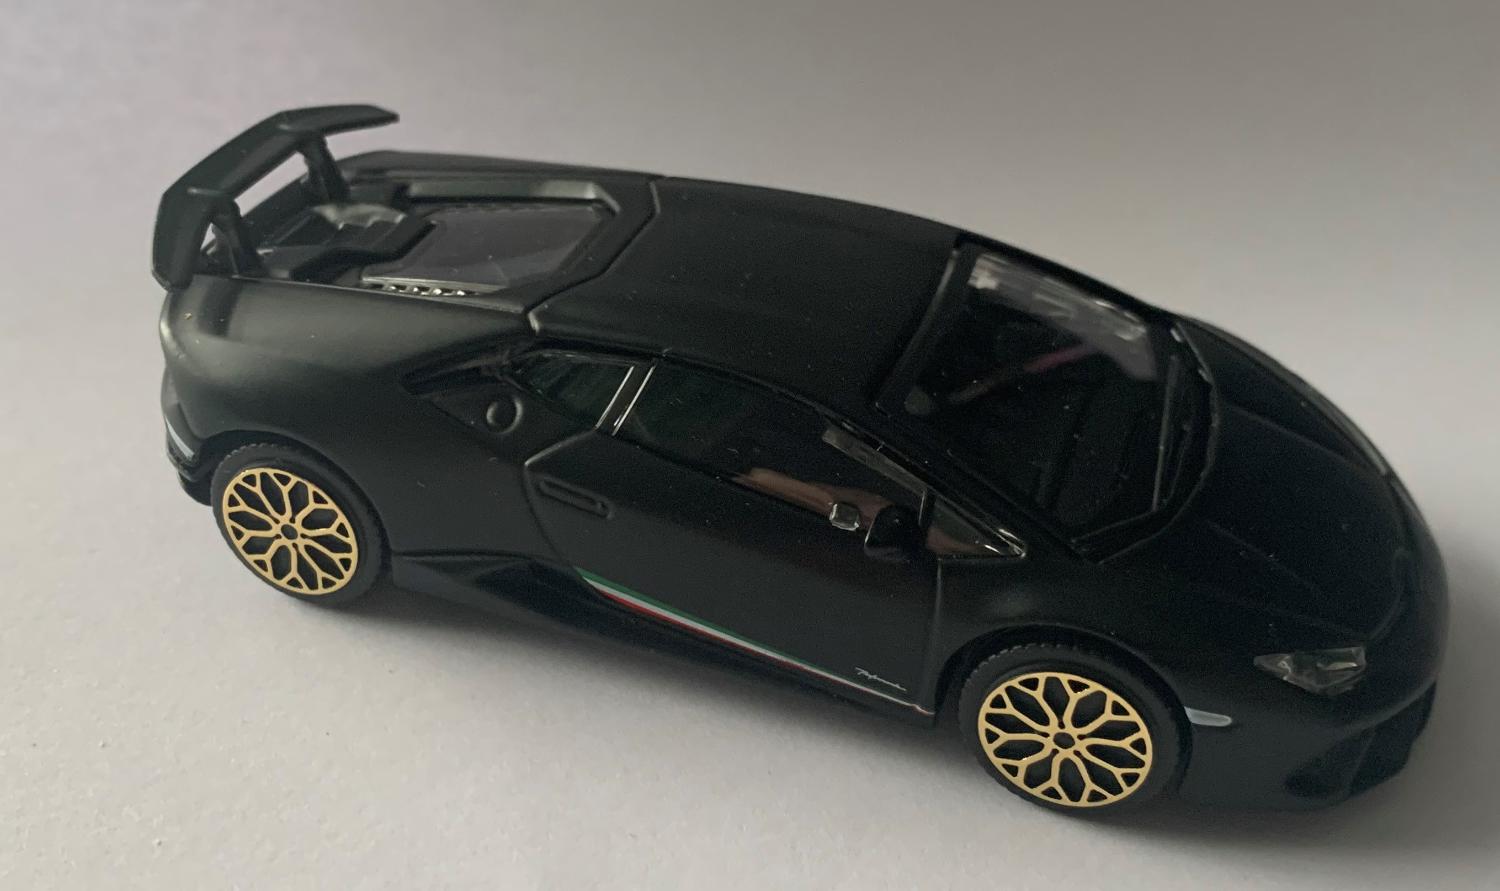 Lamborghini Huracan Performante in matt black 1:43 scale model from Bburago, streetfire